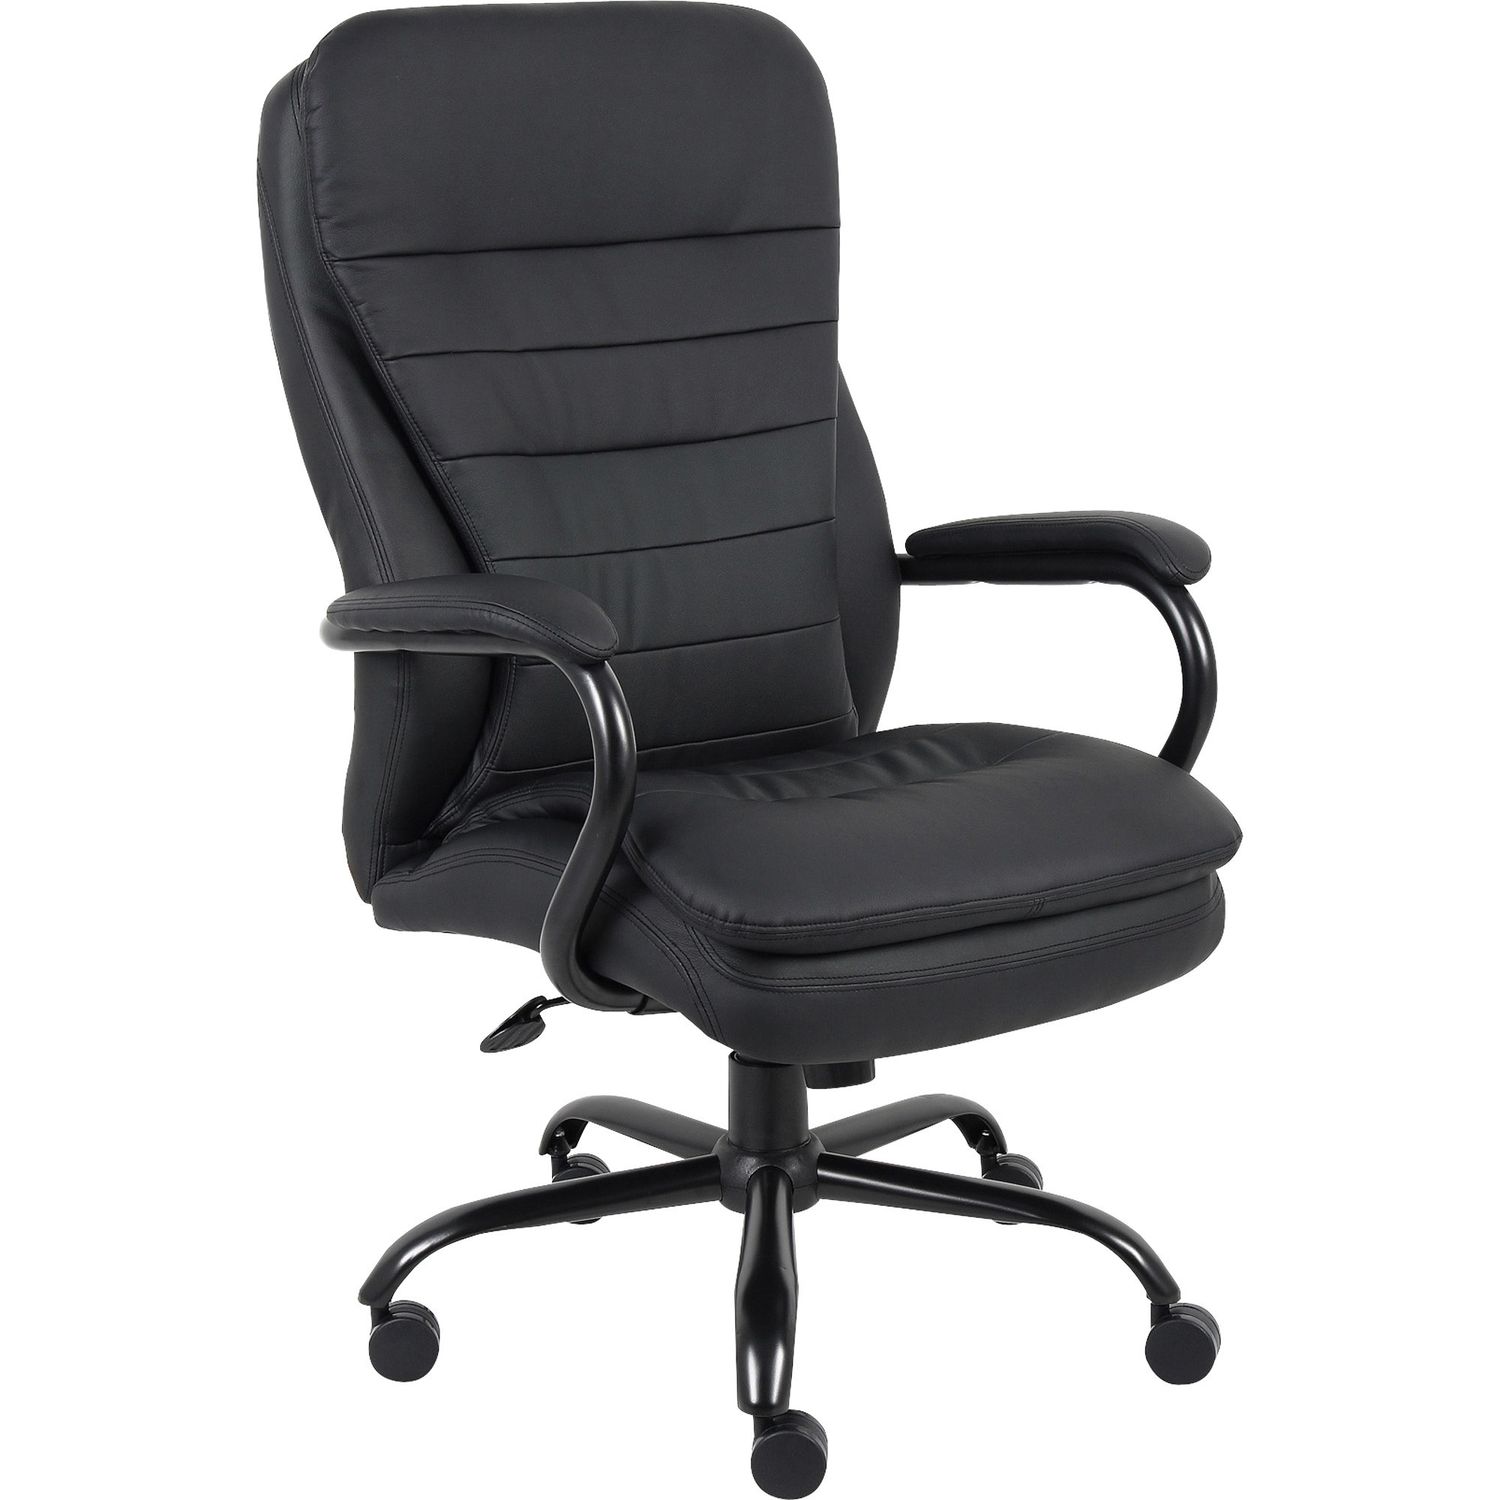 Executive Chair Black Leather Seat, 5-star Base, Black, 1 Each